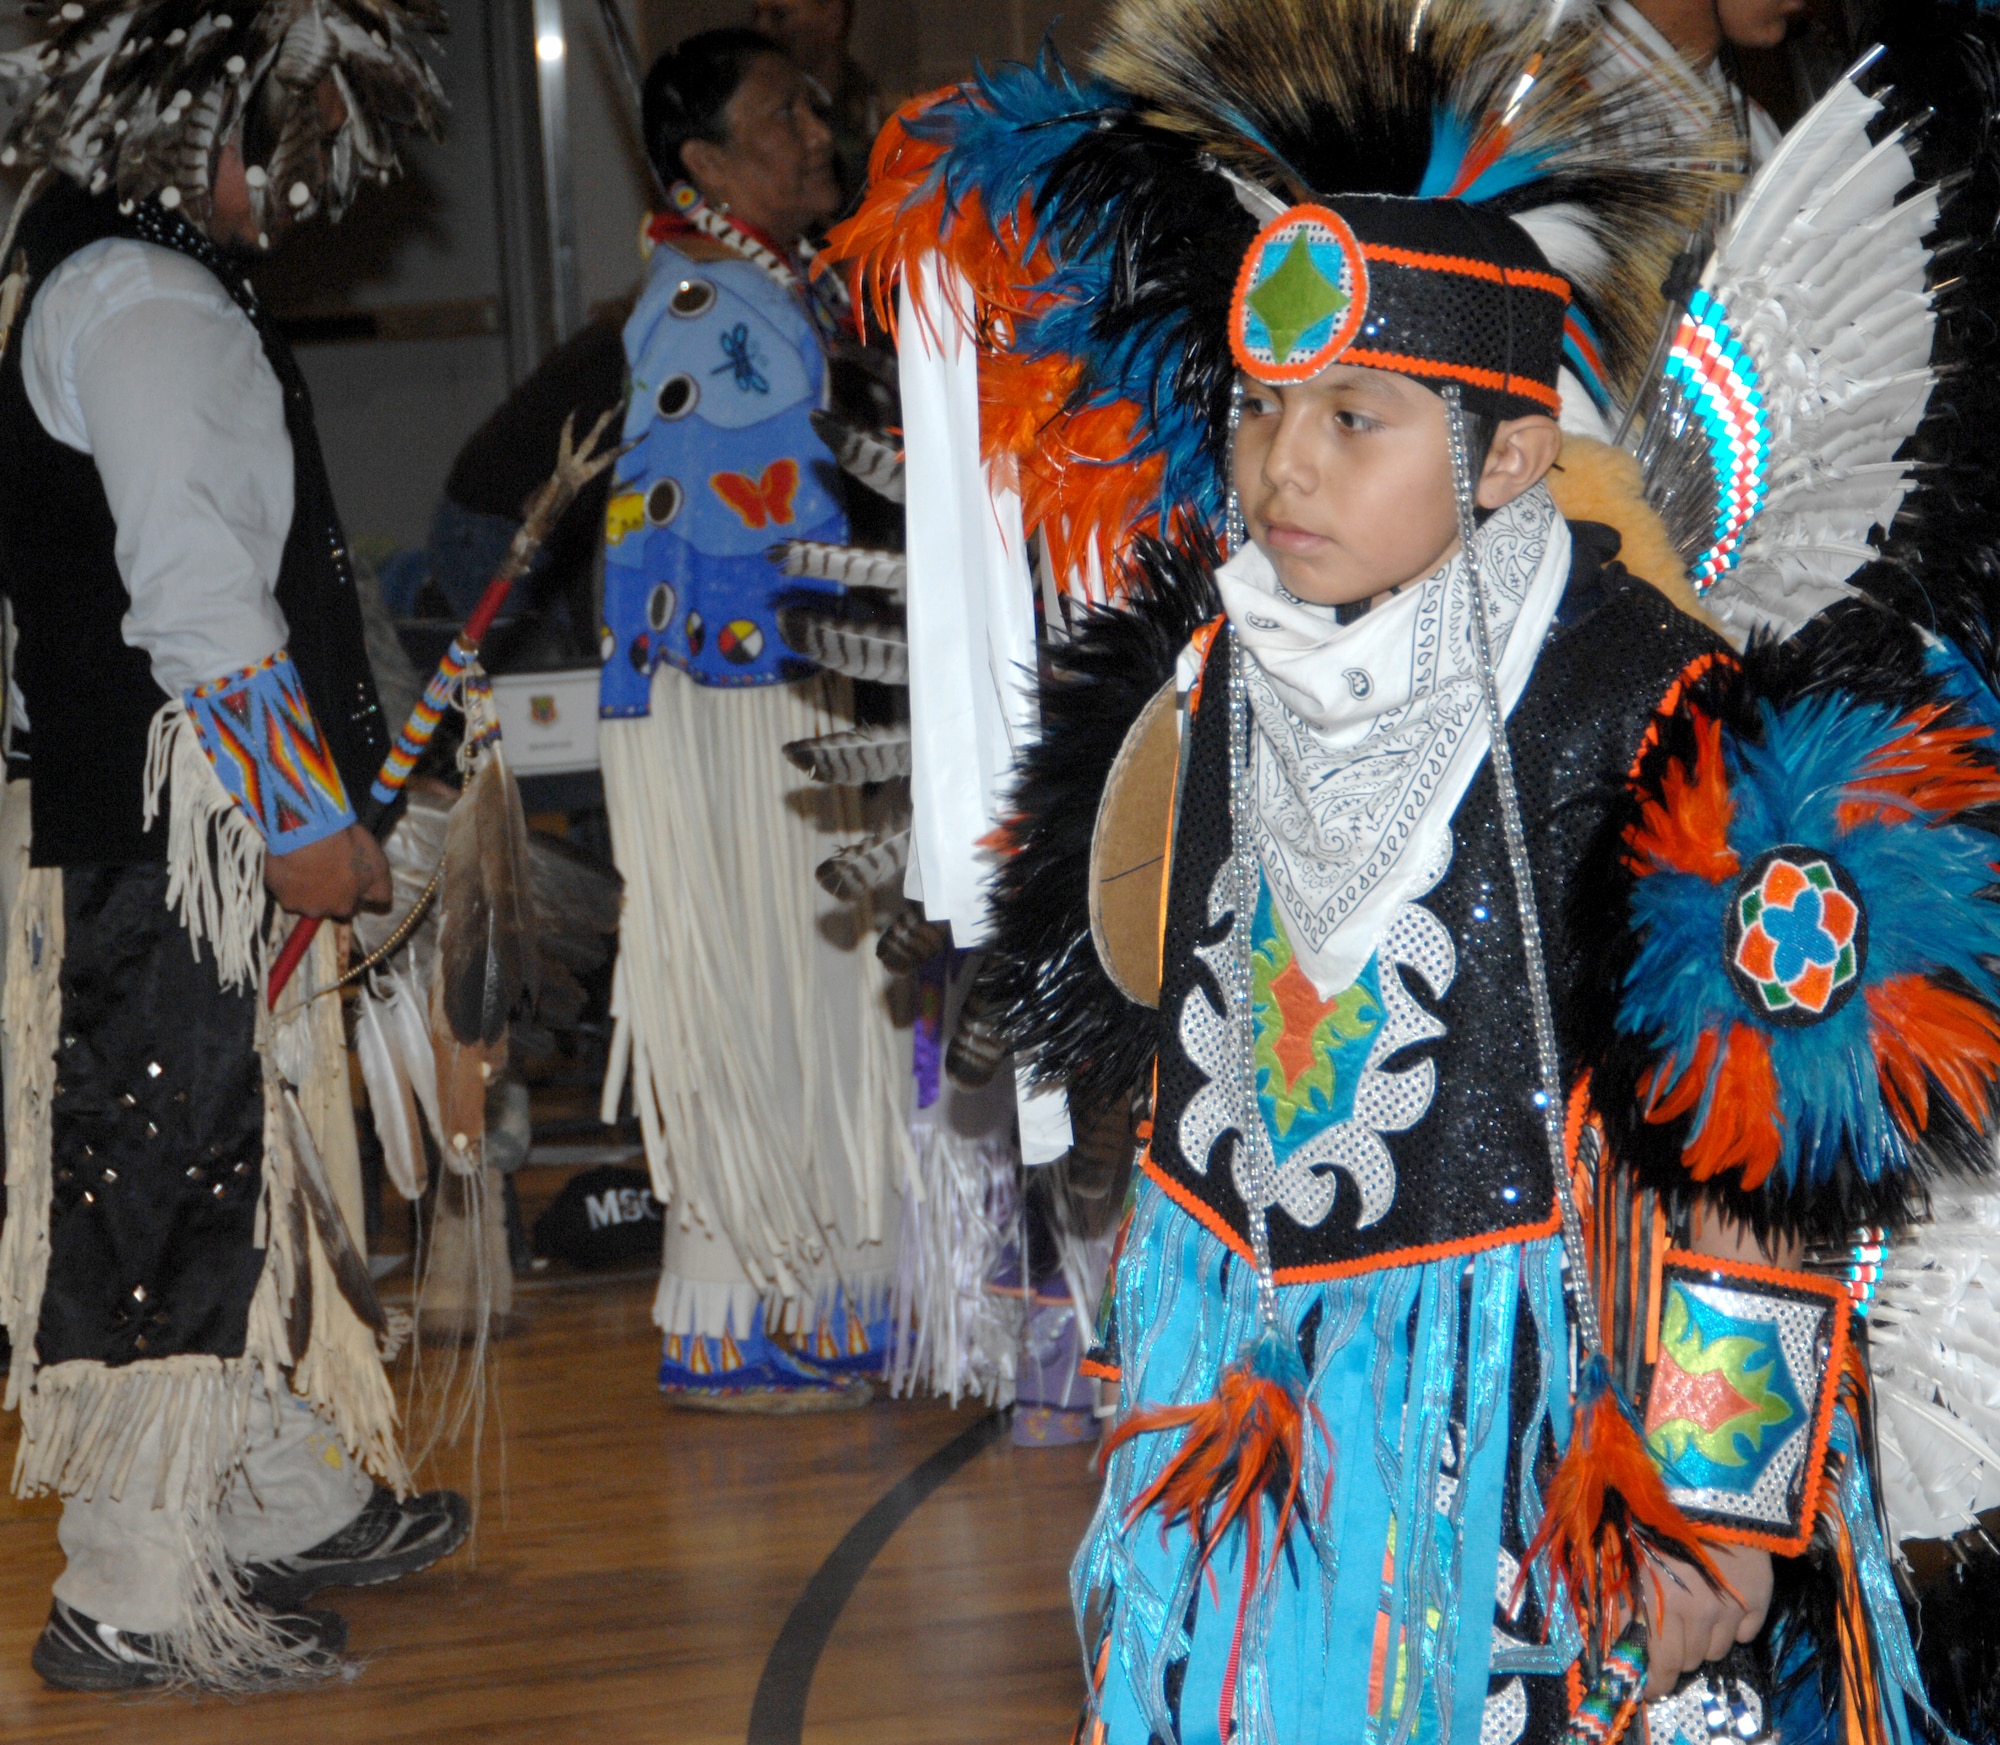 ShoshonePaiute Tribe hosts annual powwow celebration for Gunfighters